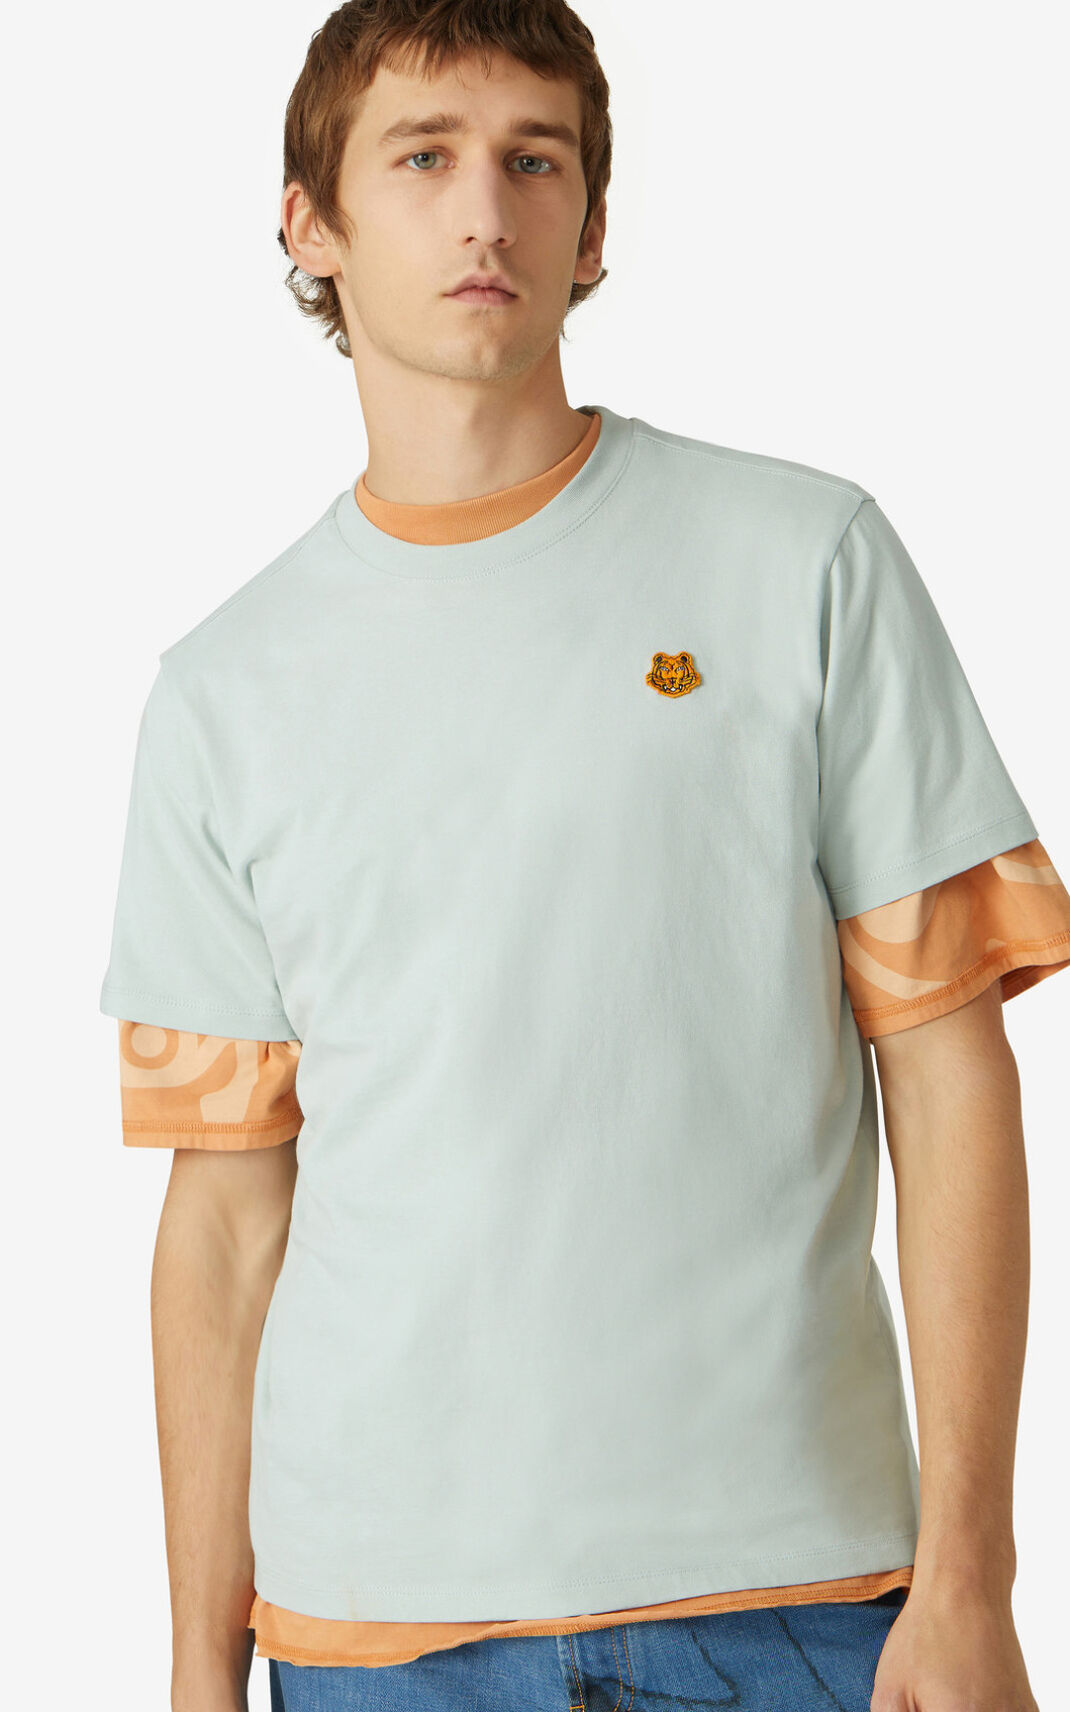 Kenzo Tiger Crest T Shirt Olive Green For Mens 3472SVTMA